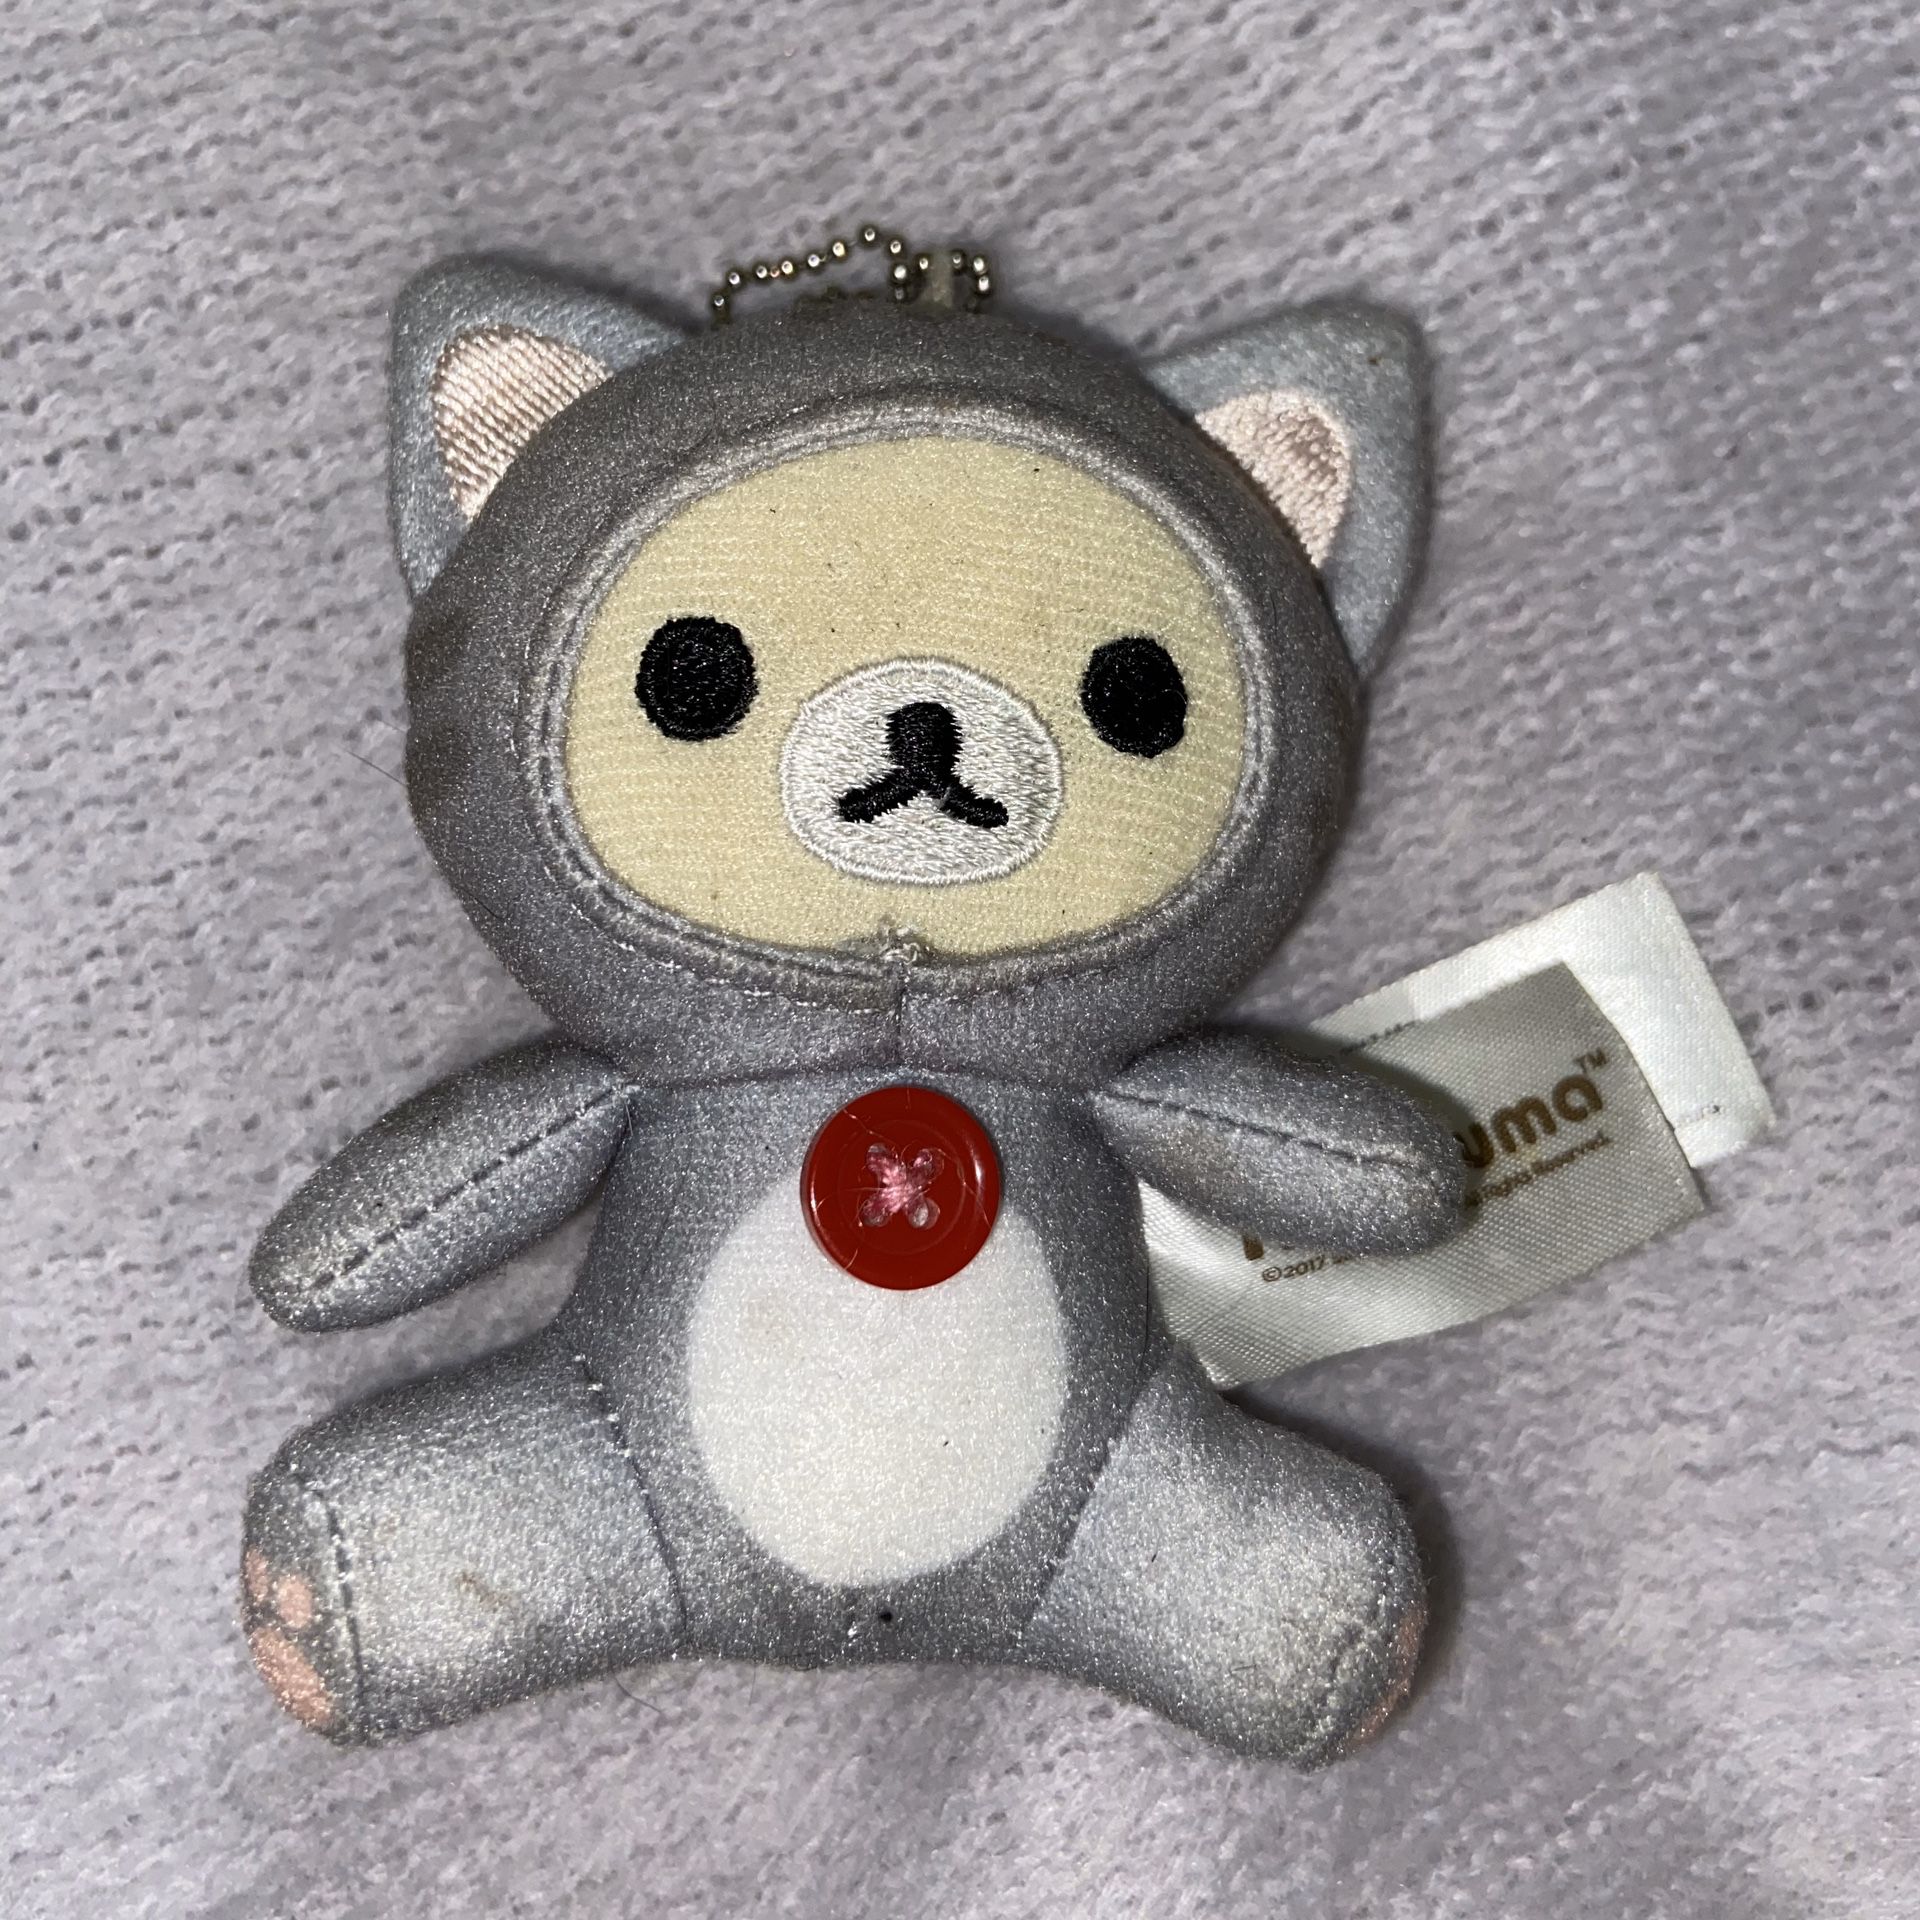 Official Sanrio Rilakkuma keychain / plushie